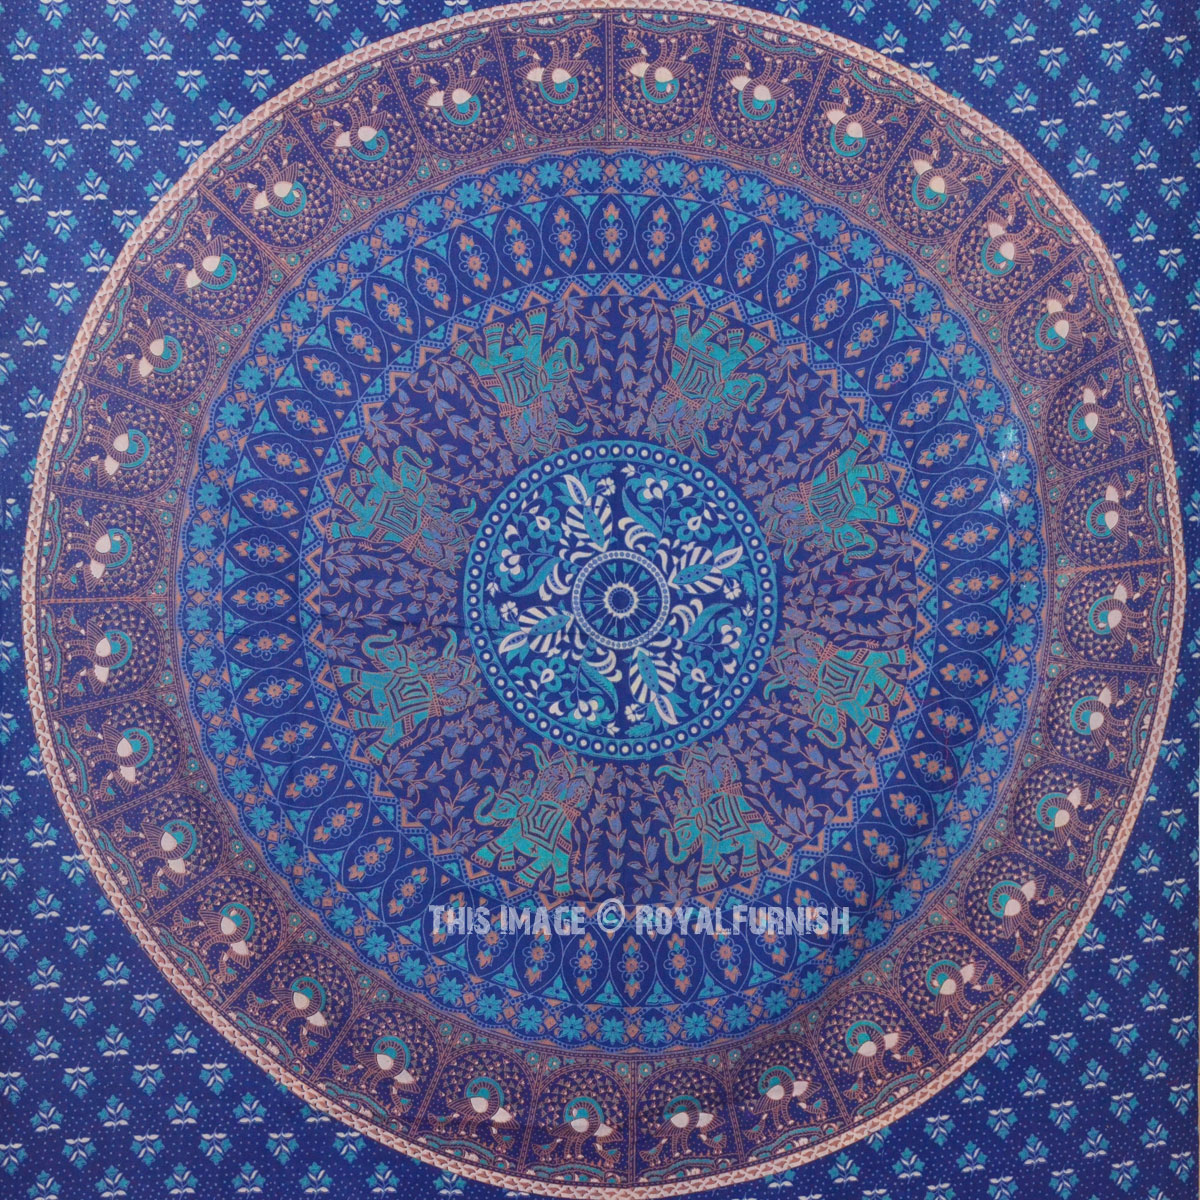 Small Blue Birds Boho Patterned Mandala Tapestry Wall Hanging, Hippie